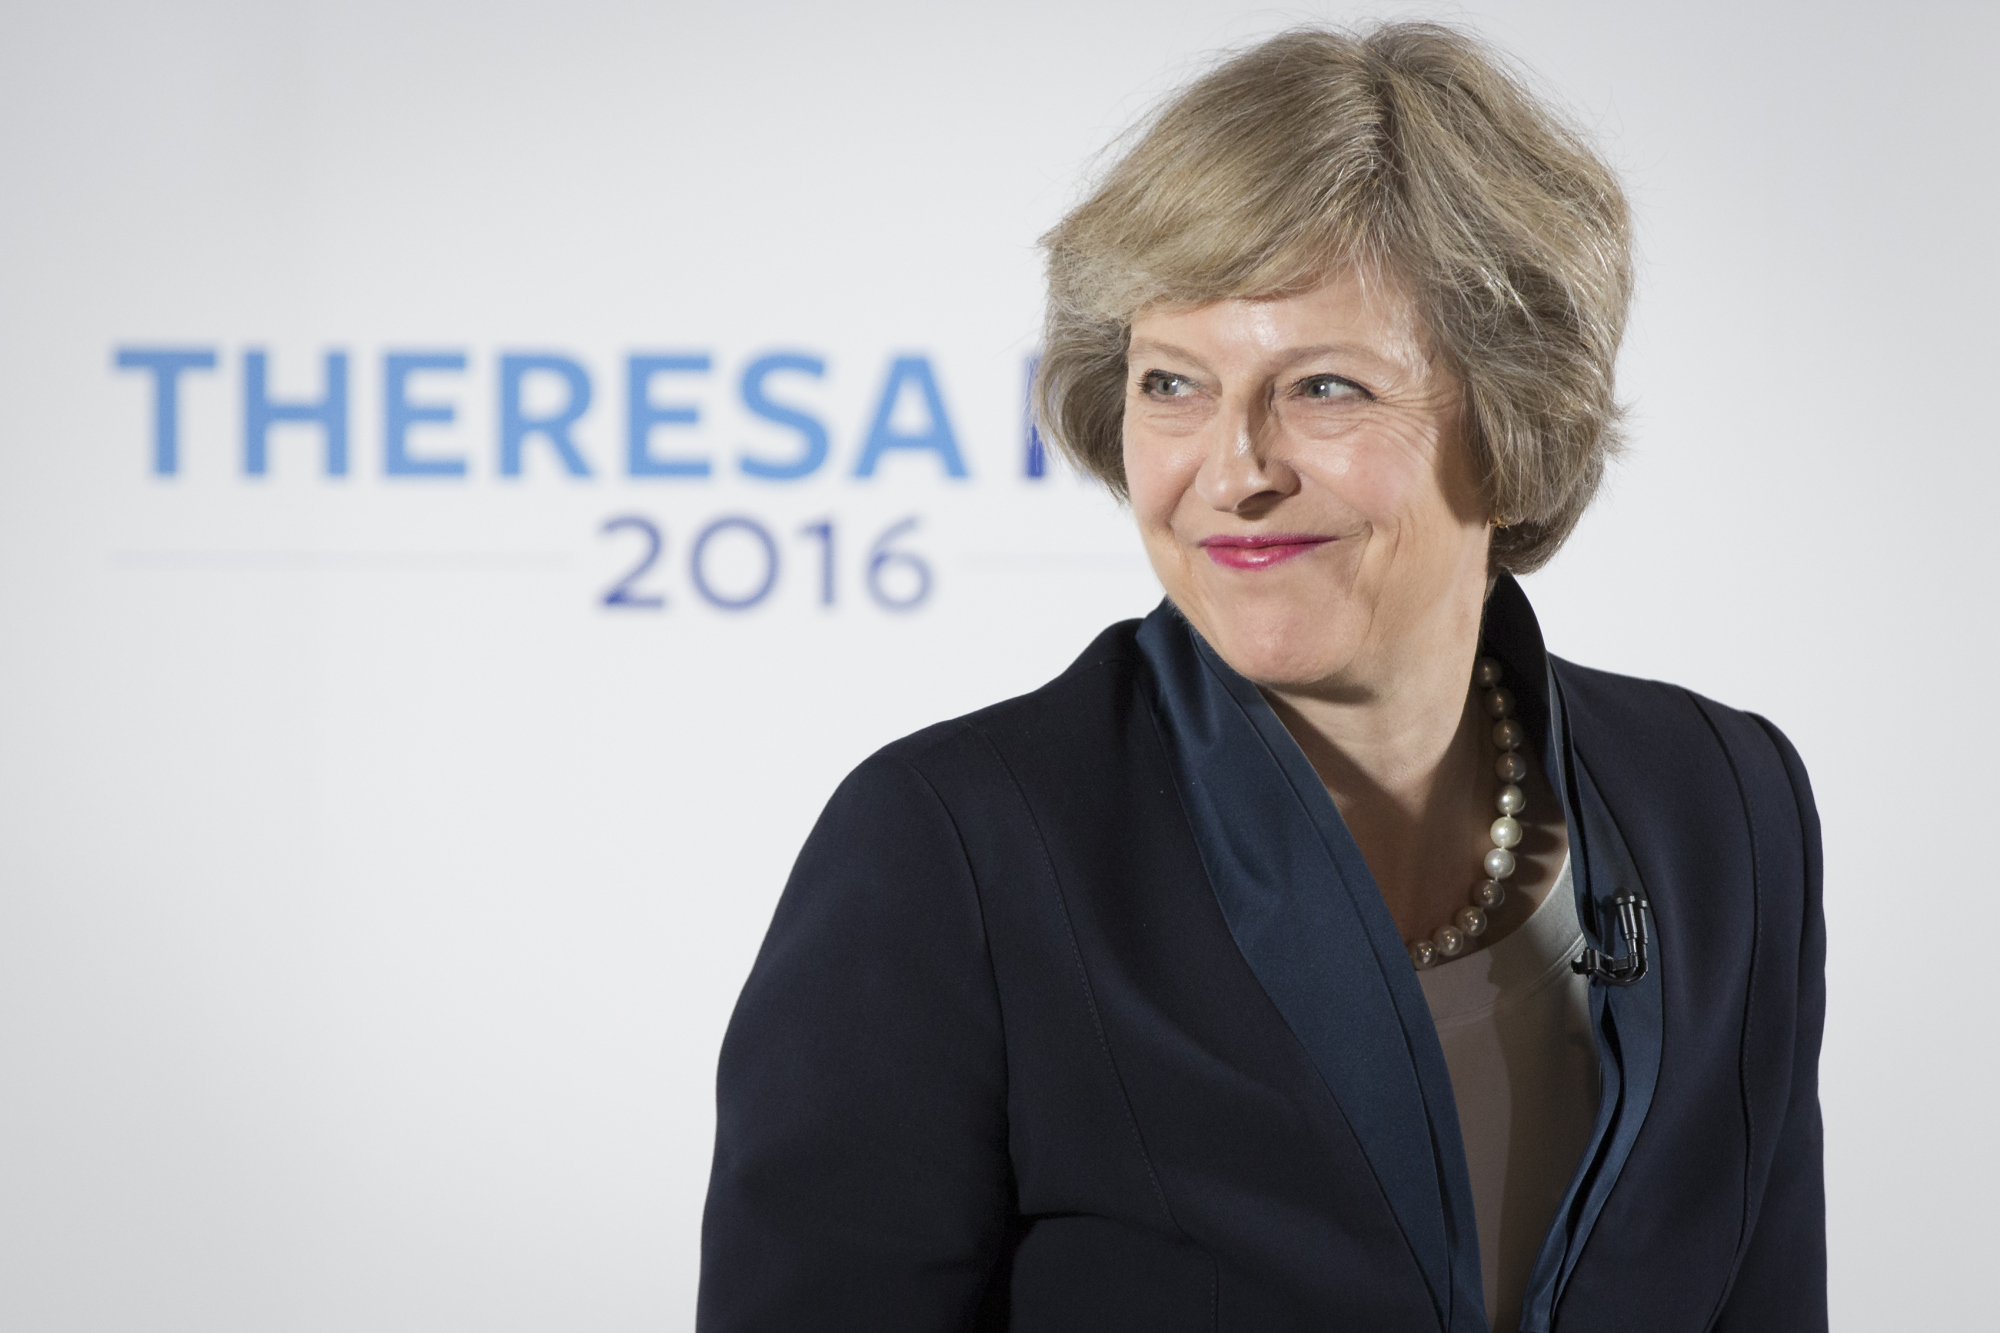 「EU離脱最善の交渉を行う」…英国で26年ぶり女性首相誕生が話題になっている - NAVER まとめ